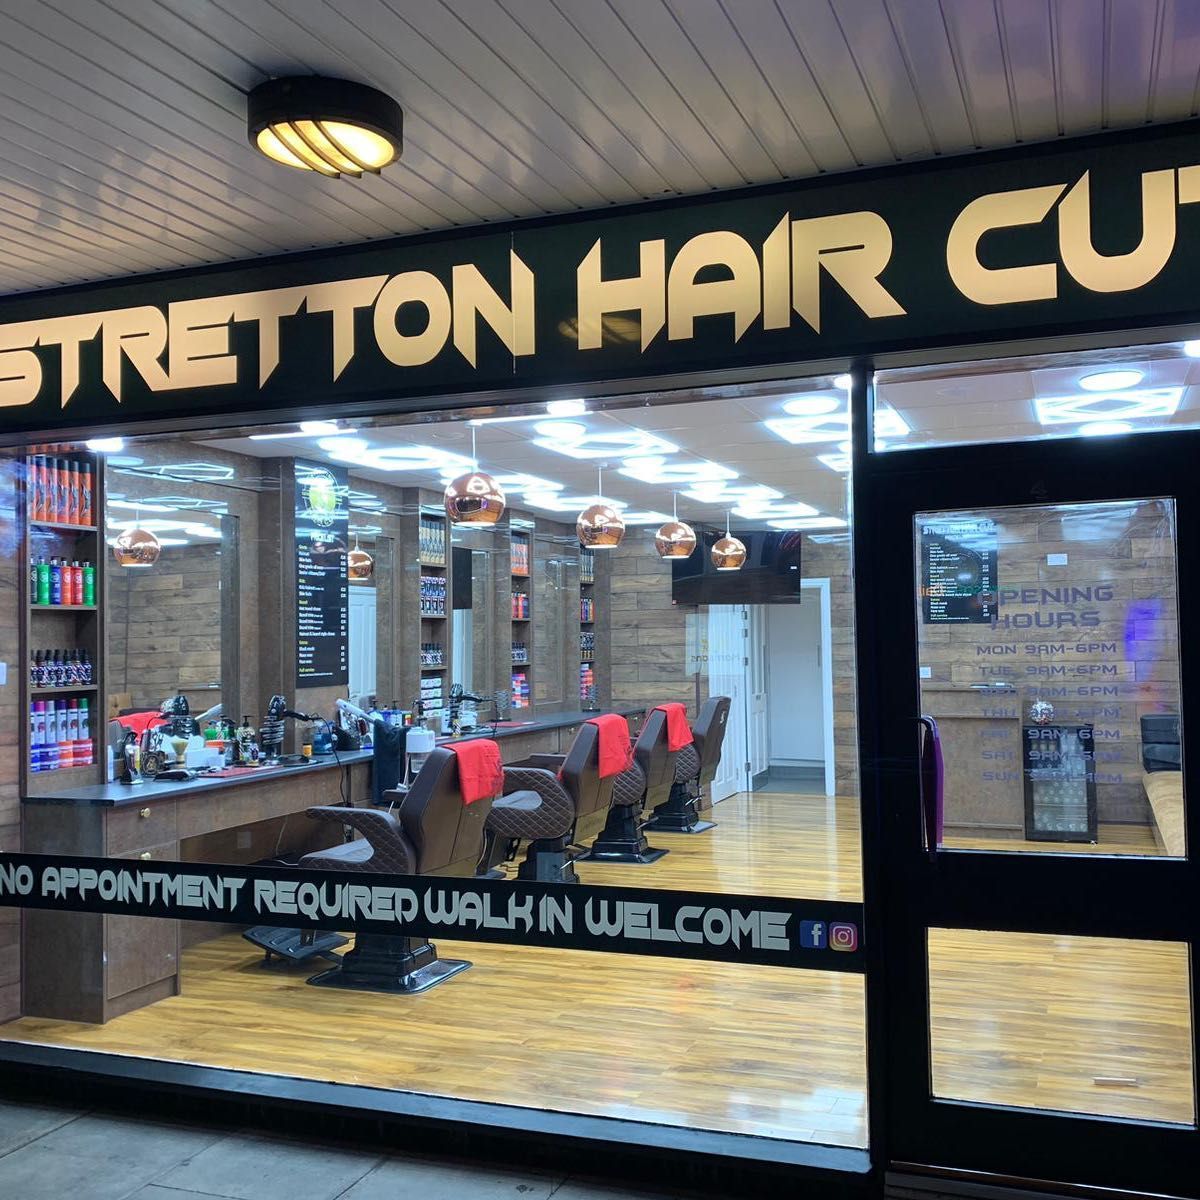 Stretton hair cut, Unit 4 the precinct, Main Street, DE13 0DZ, Burton upon Trent